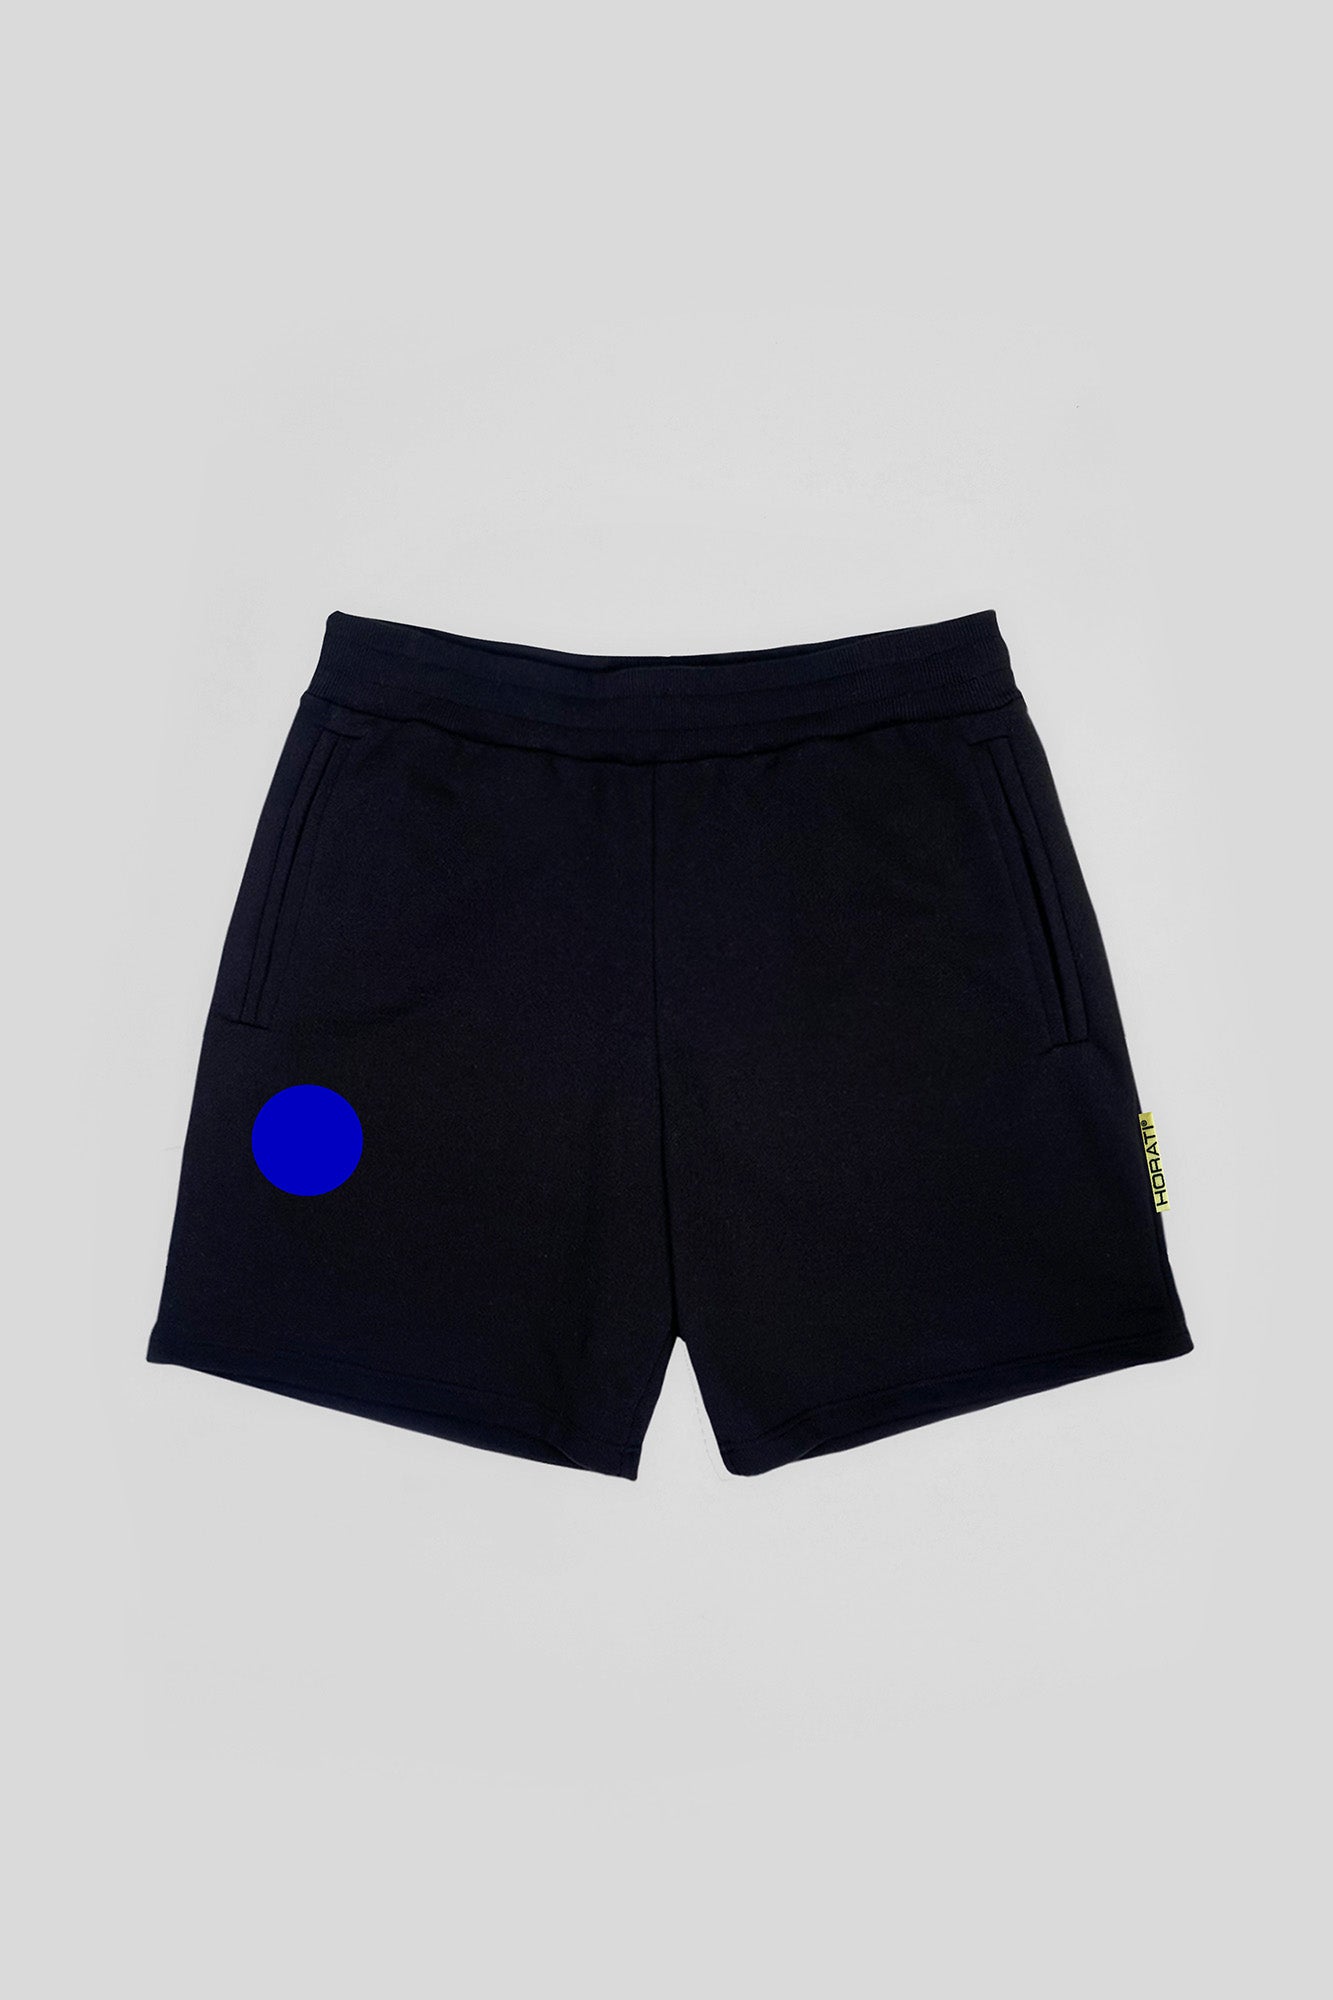 FRAMING BLUE Black Shorts - HORATI